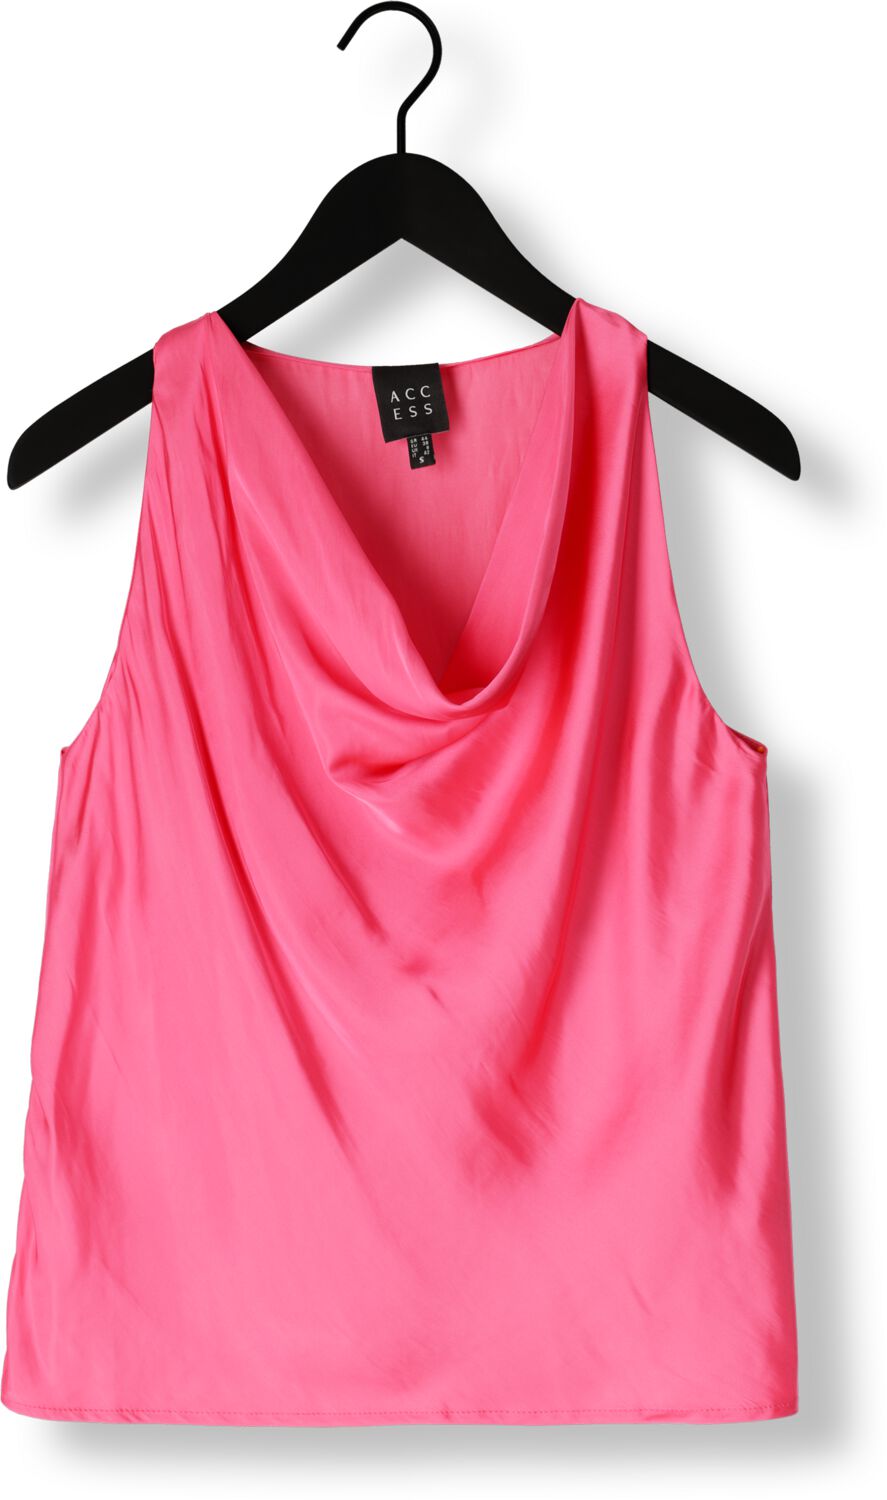 ACCESS Dames Tops & T-shirts Draped Top Roze